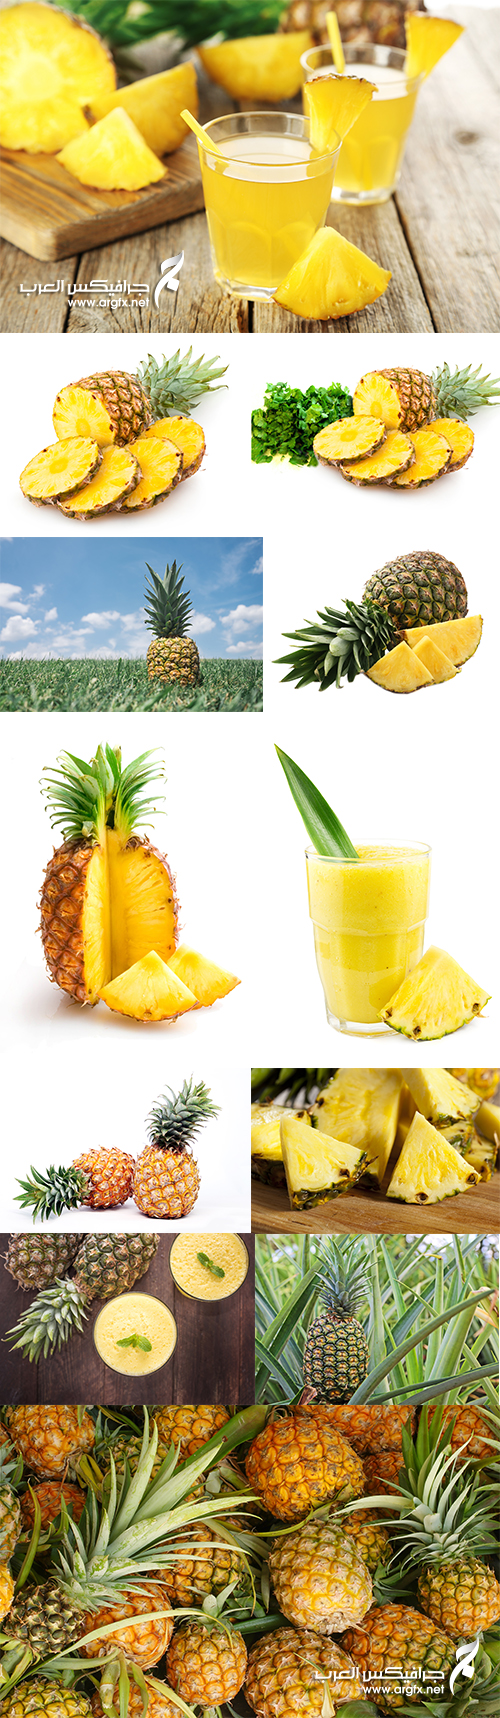 Stock Image Pineapple - 12 UHQ JPEG